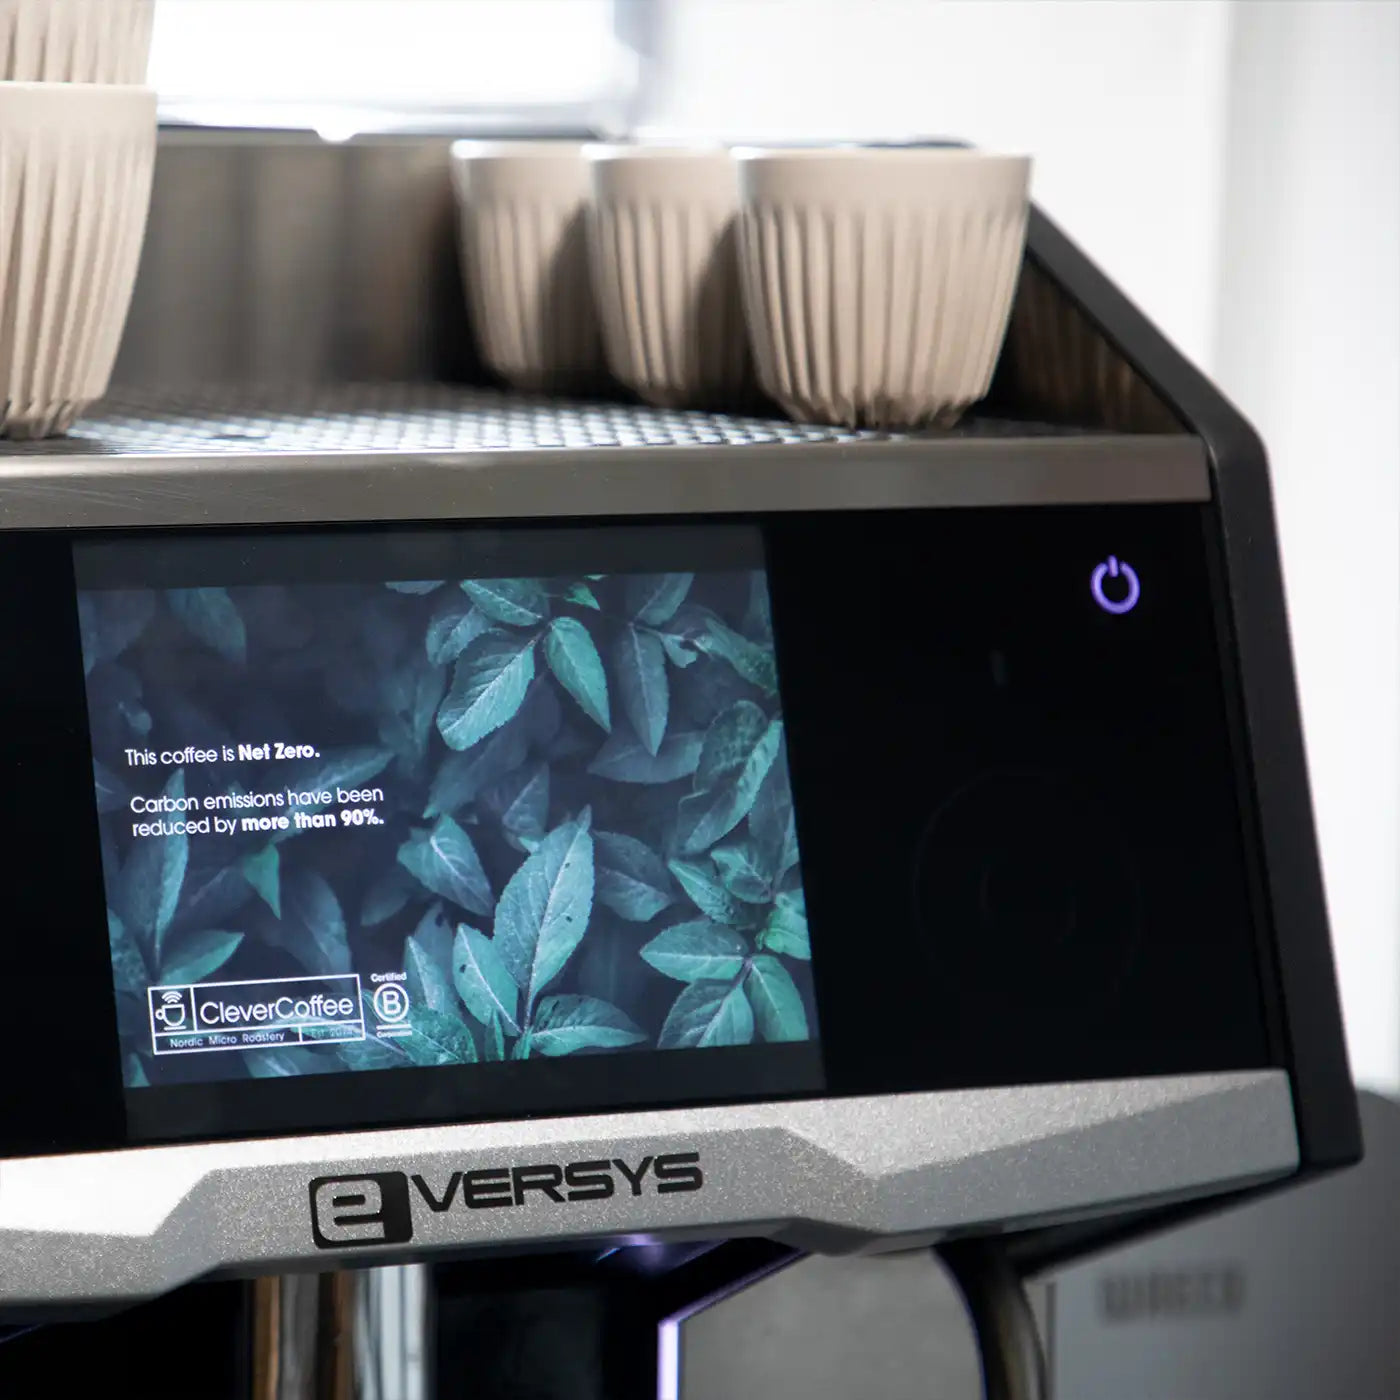 Eversys cameo classic, fuldautomatisk kaffemaskine med huskee kopper og netzero kaffe